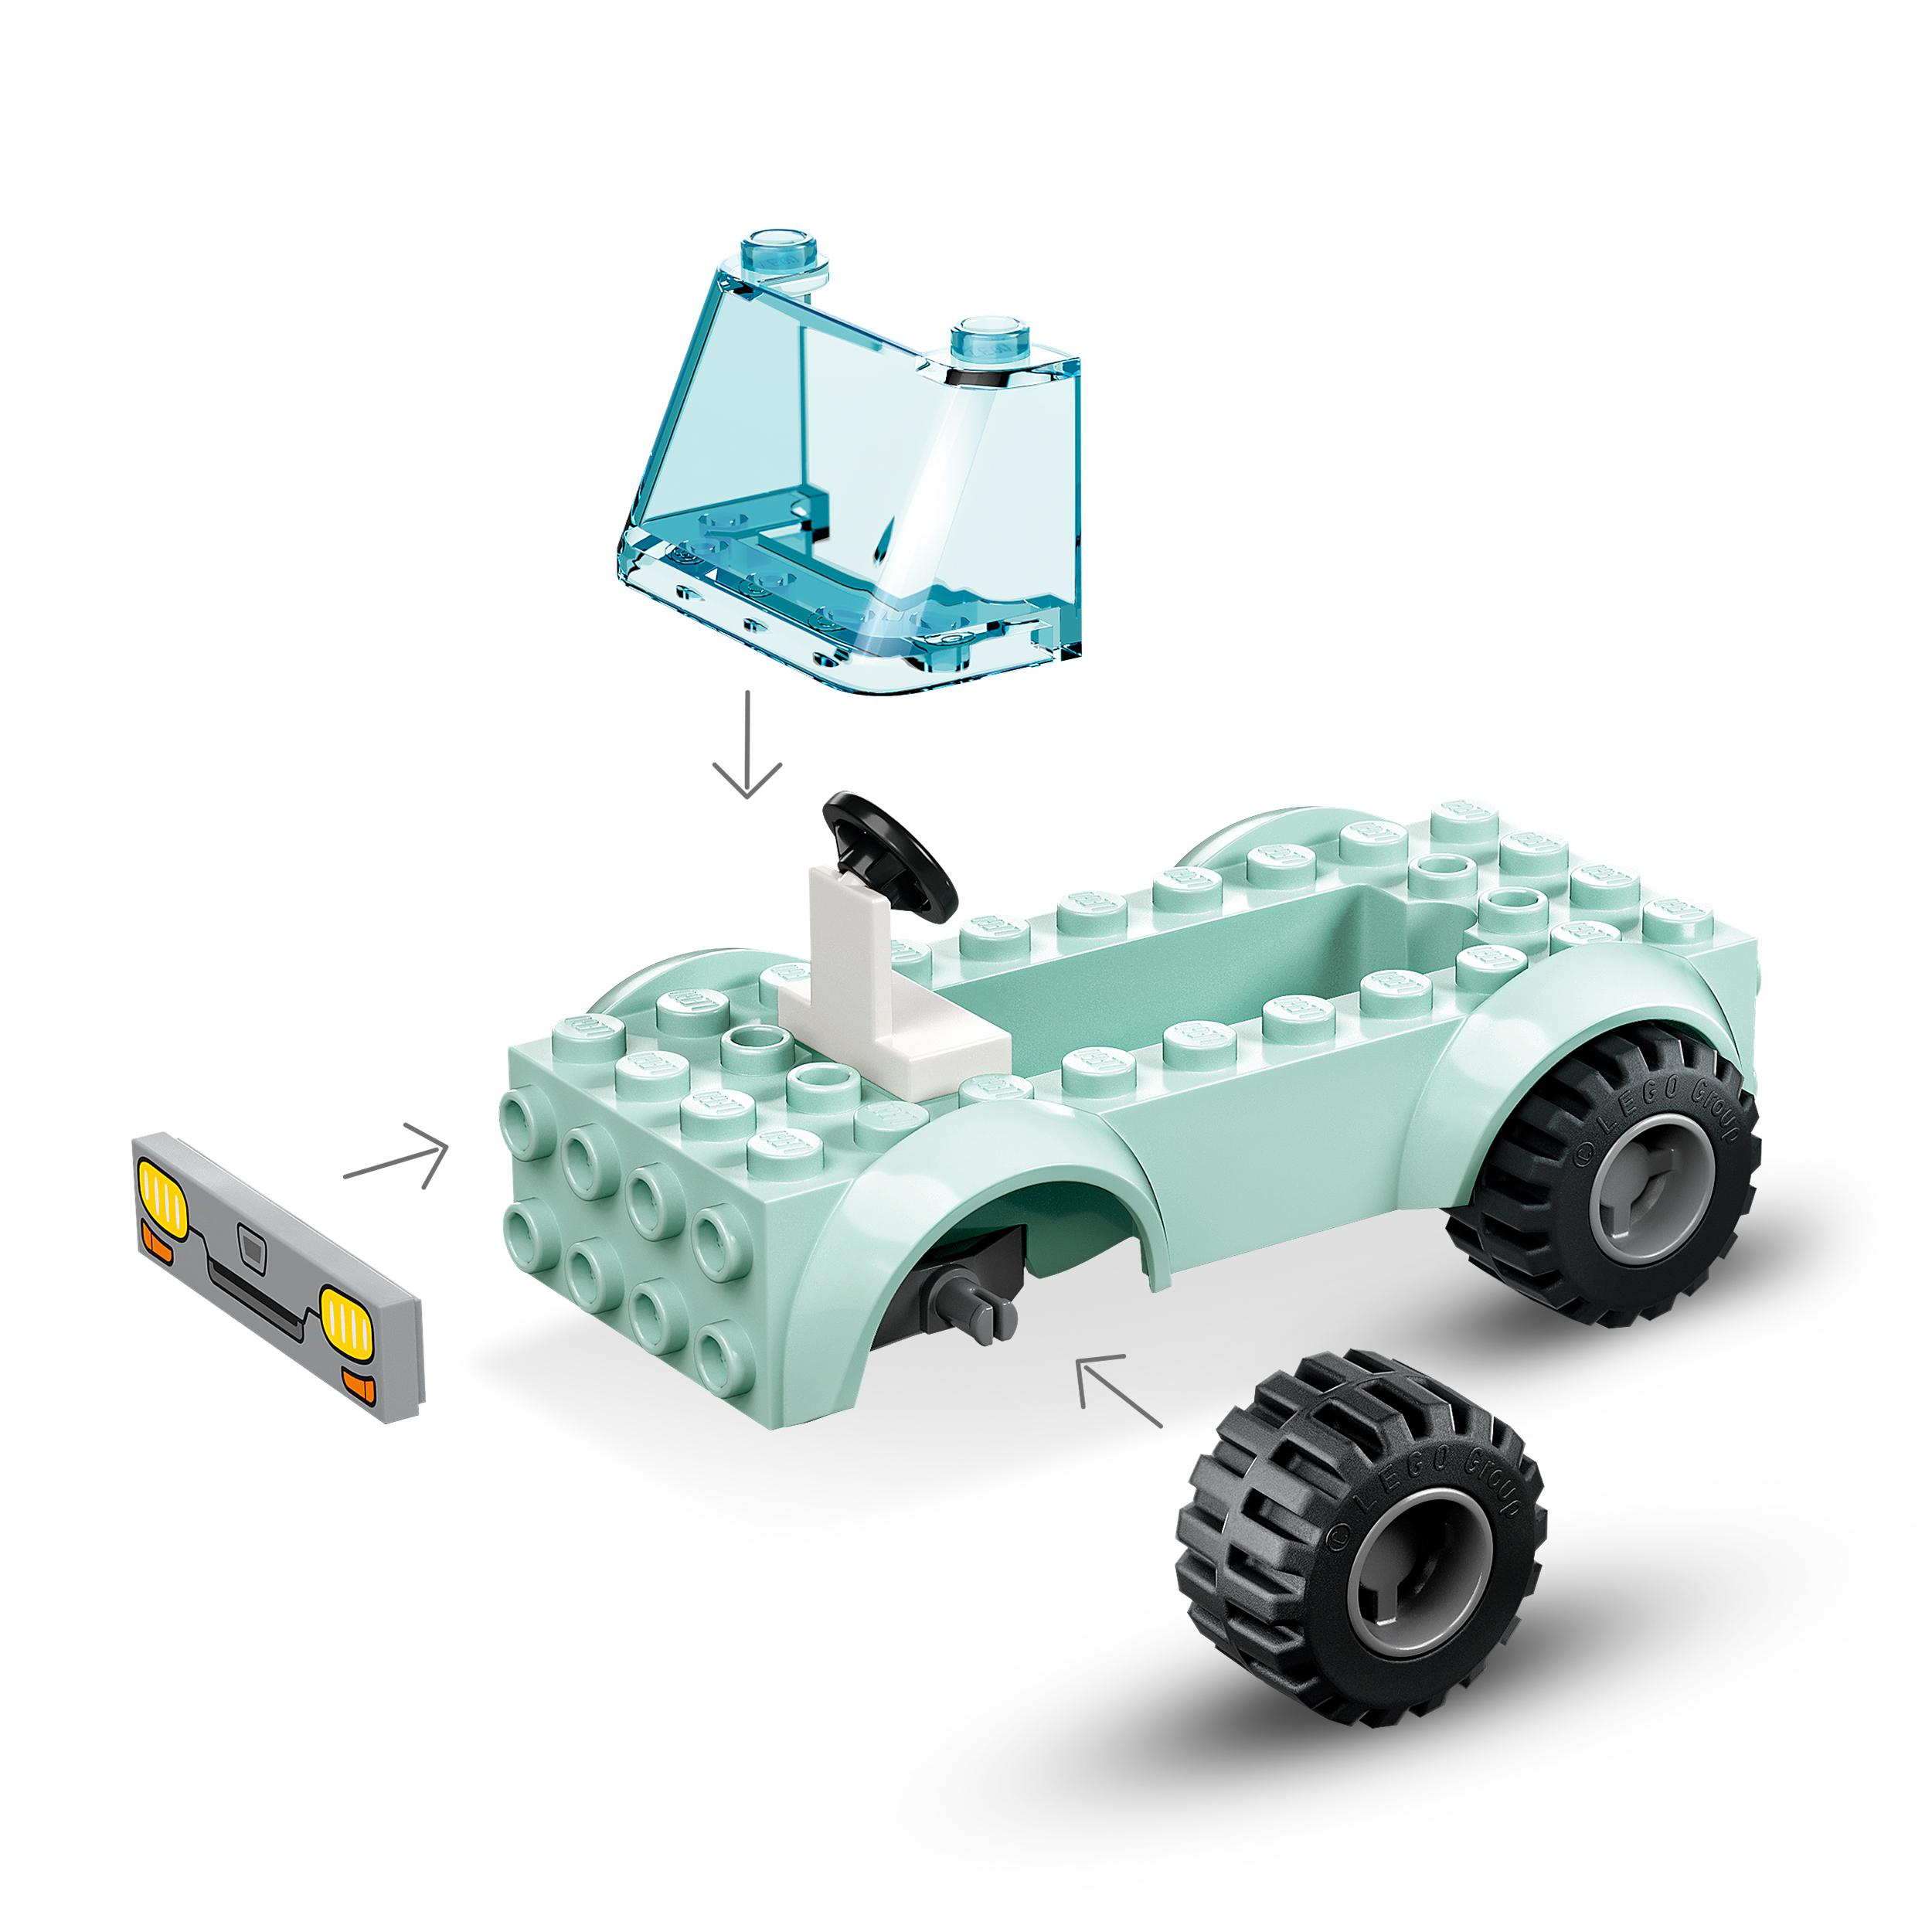 City Mehrfarbig Bausatz, Tierrettungswagen 60382 LEGO